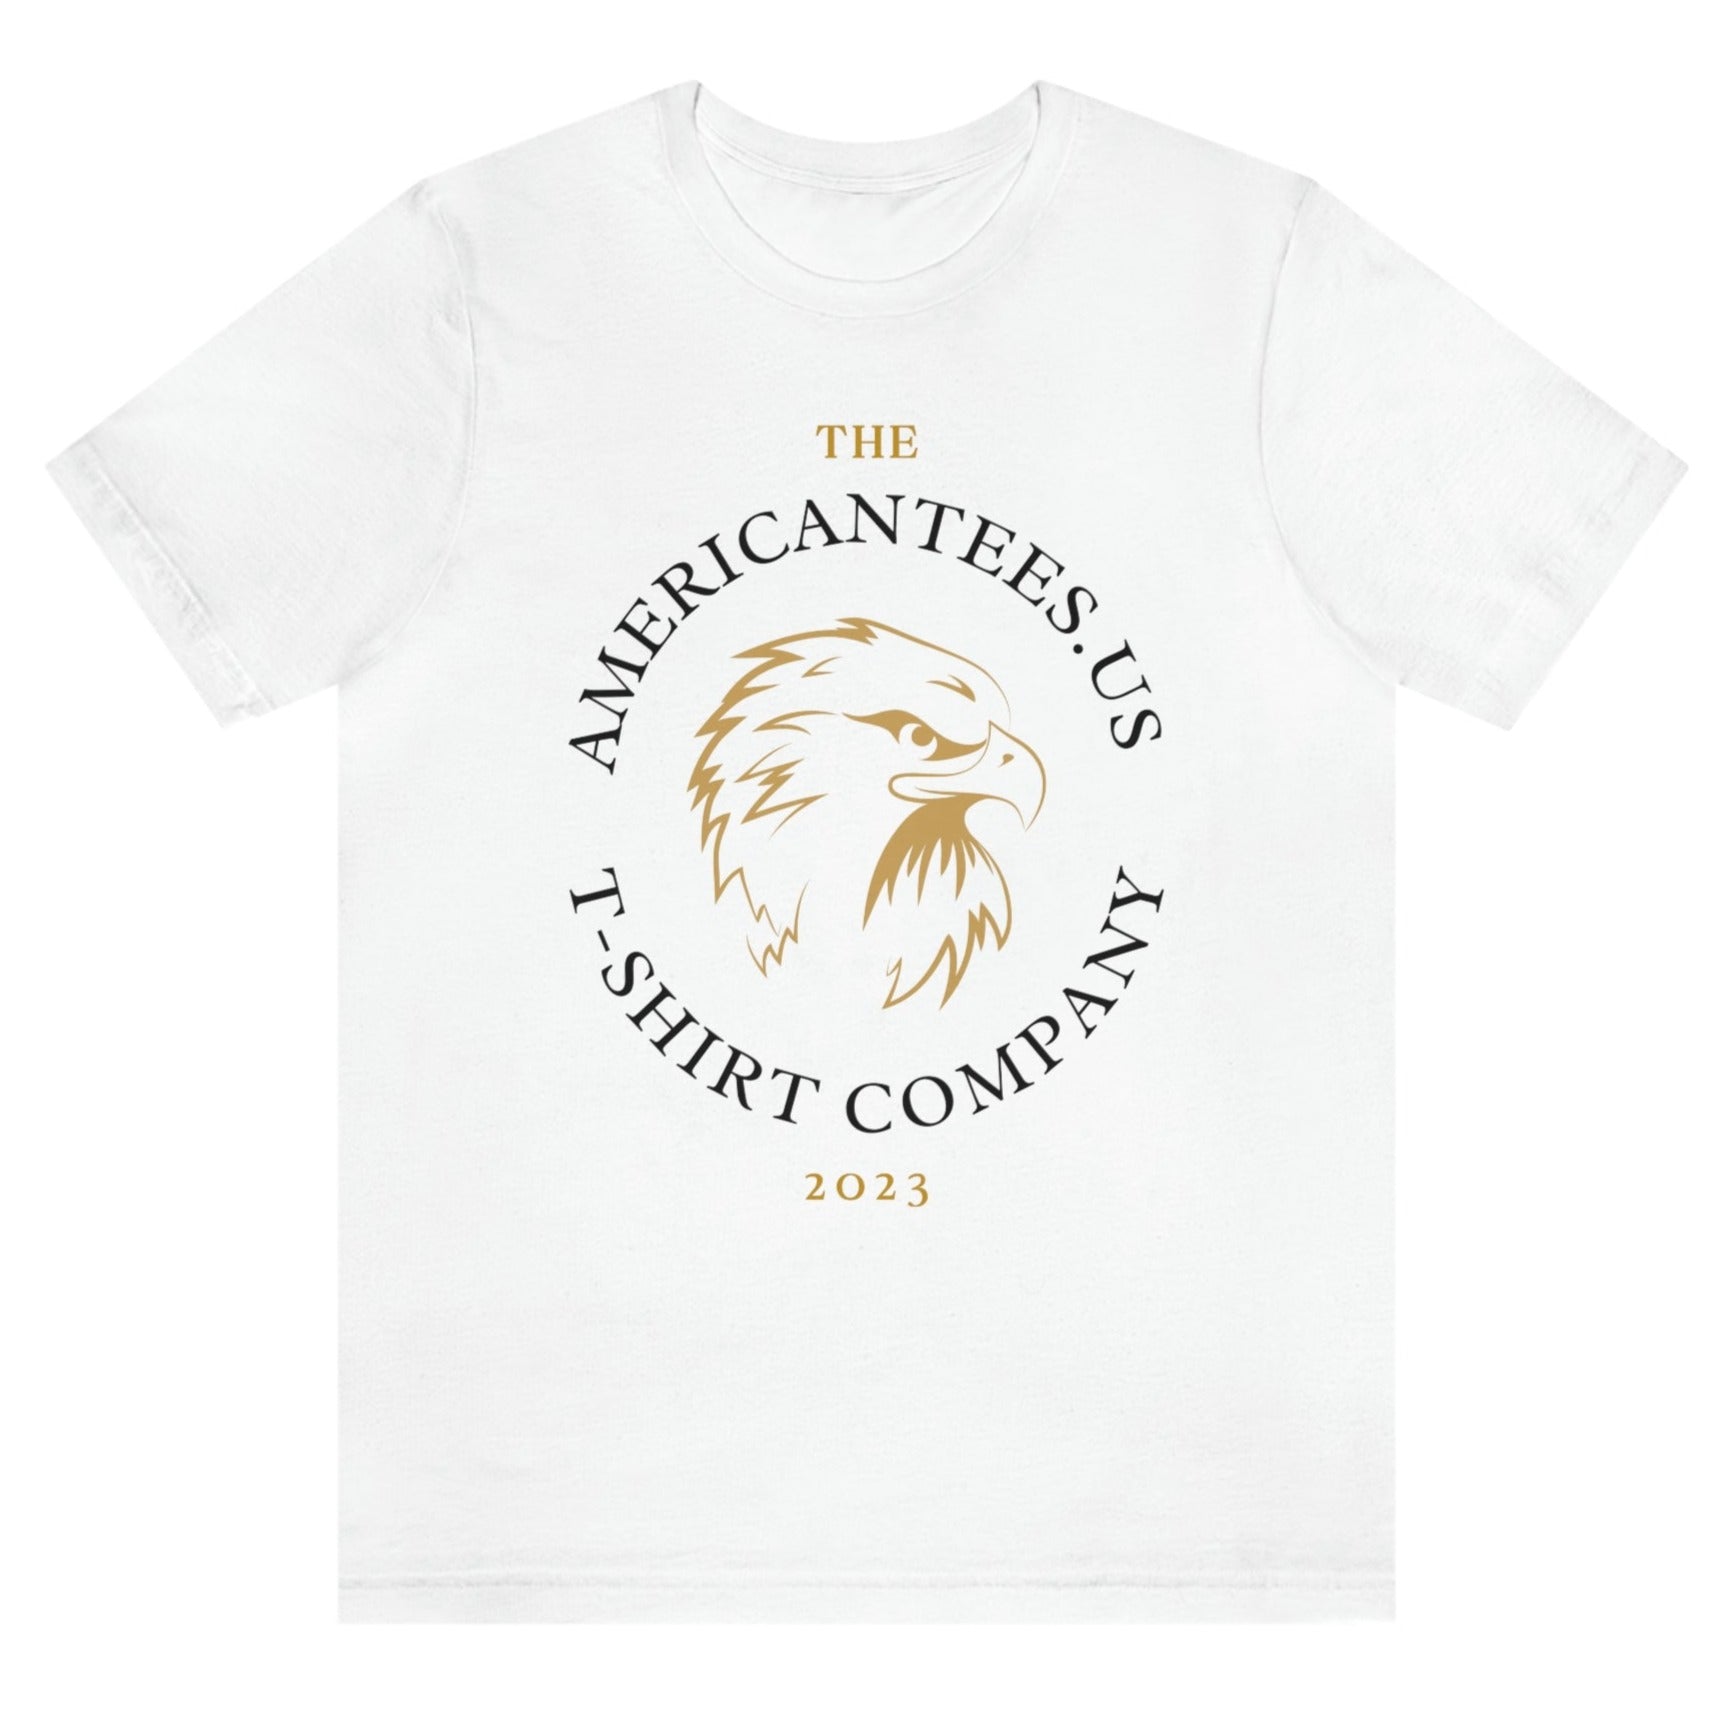 the-americantees-us-t-shirt-company-2023-white-tee